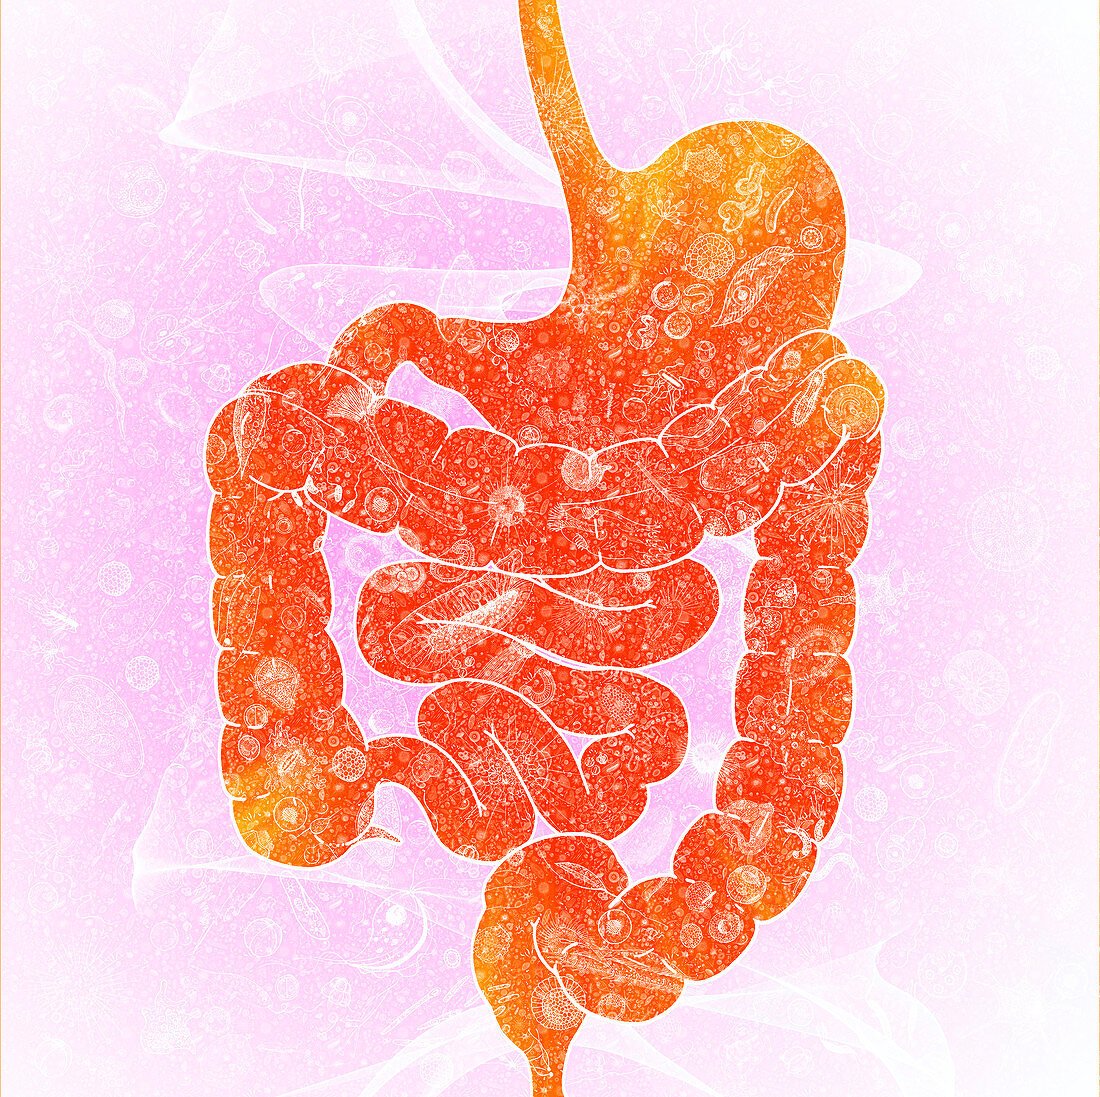 Human intestinal biomes, illustration